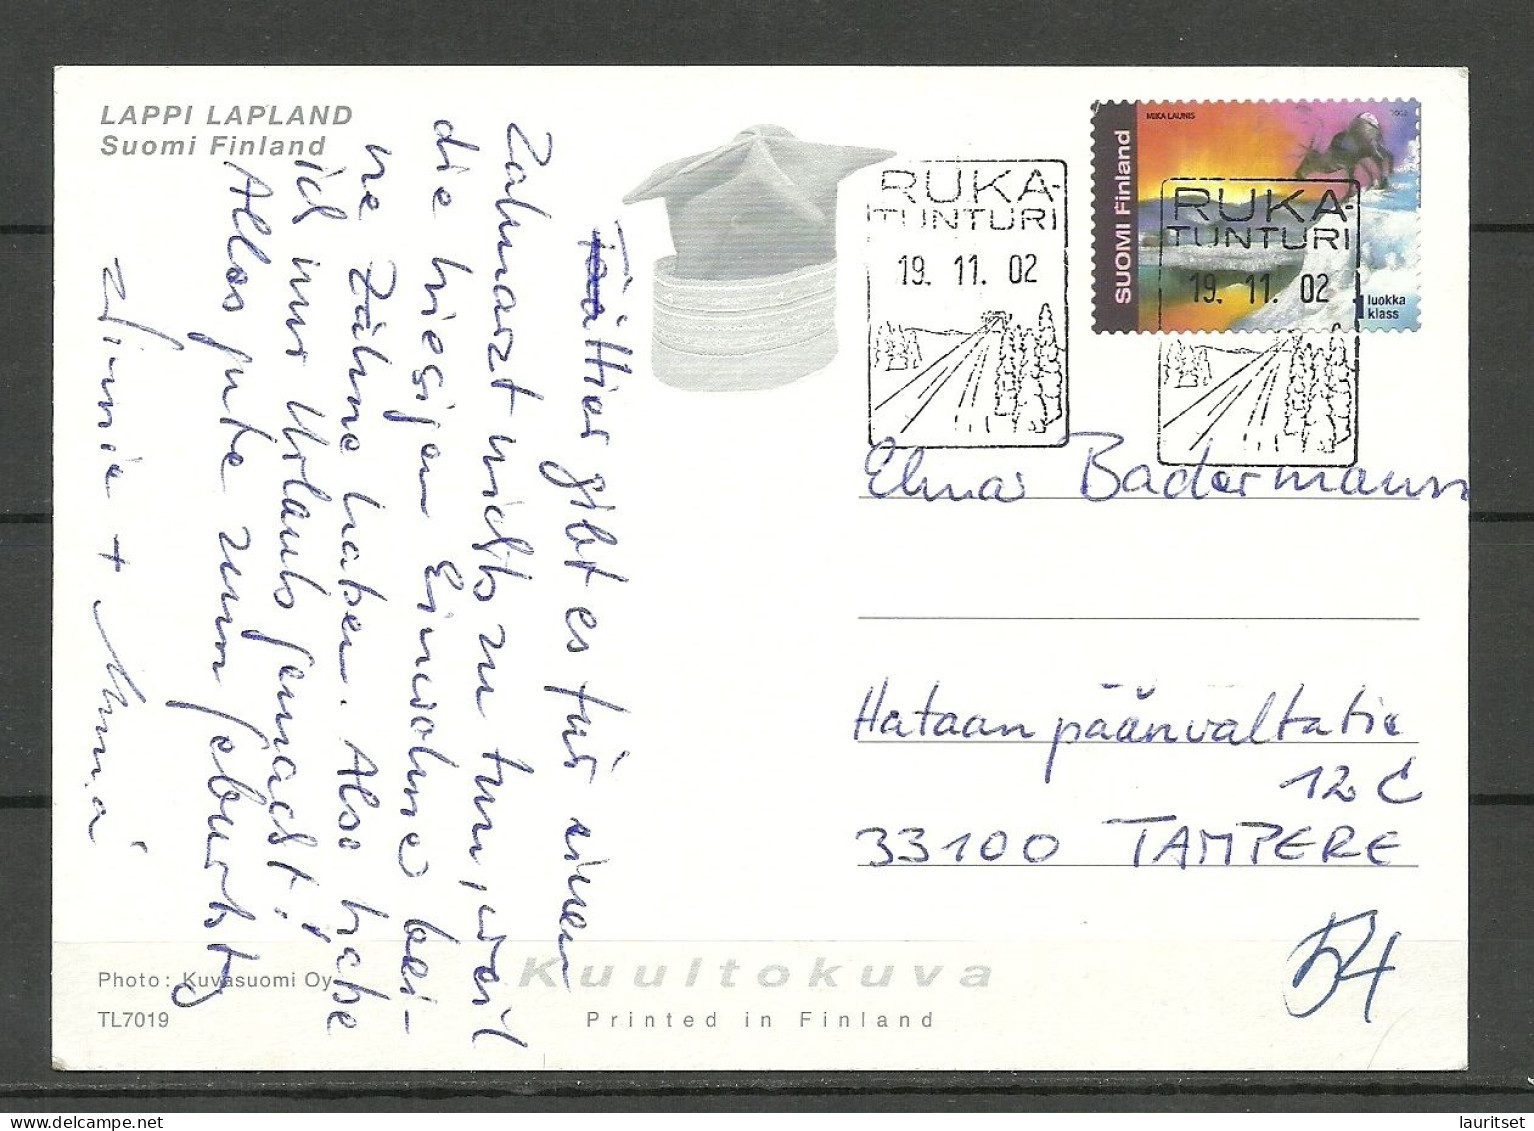 FINLAND 2002 Lappi Old Man Lapland Special Cancel RUKATUNTURI Sonderstempel, Domestically Sent Post Card - Europa